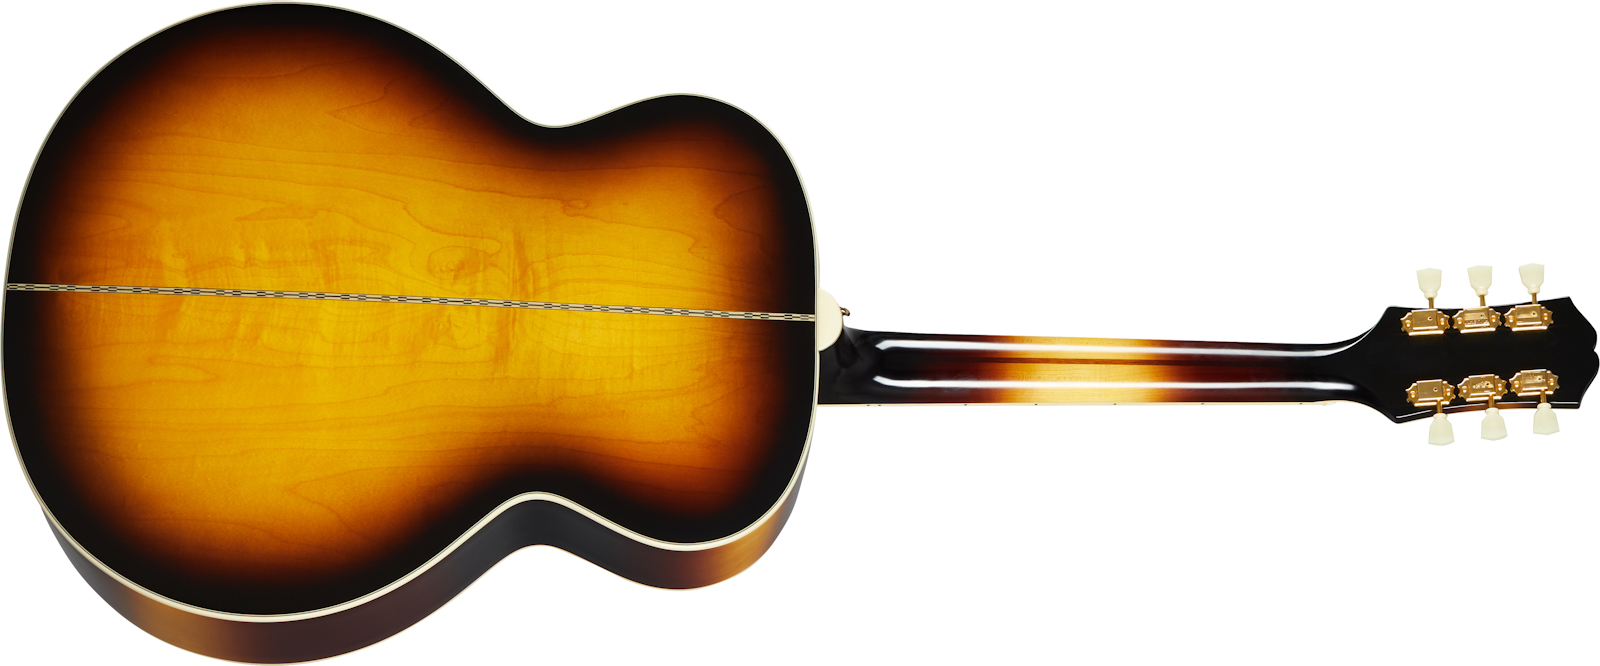 Epiphone J-200 Inspired By Gibson Jumbo Epicea Erable Lau - Aged Vintage Sunburst - Elektroakustische Gitarre - Variation 1